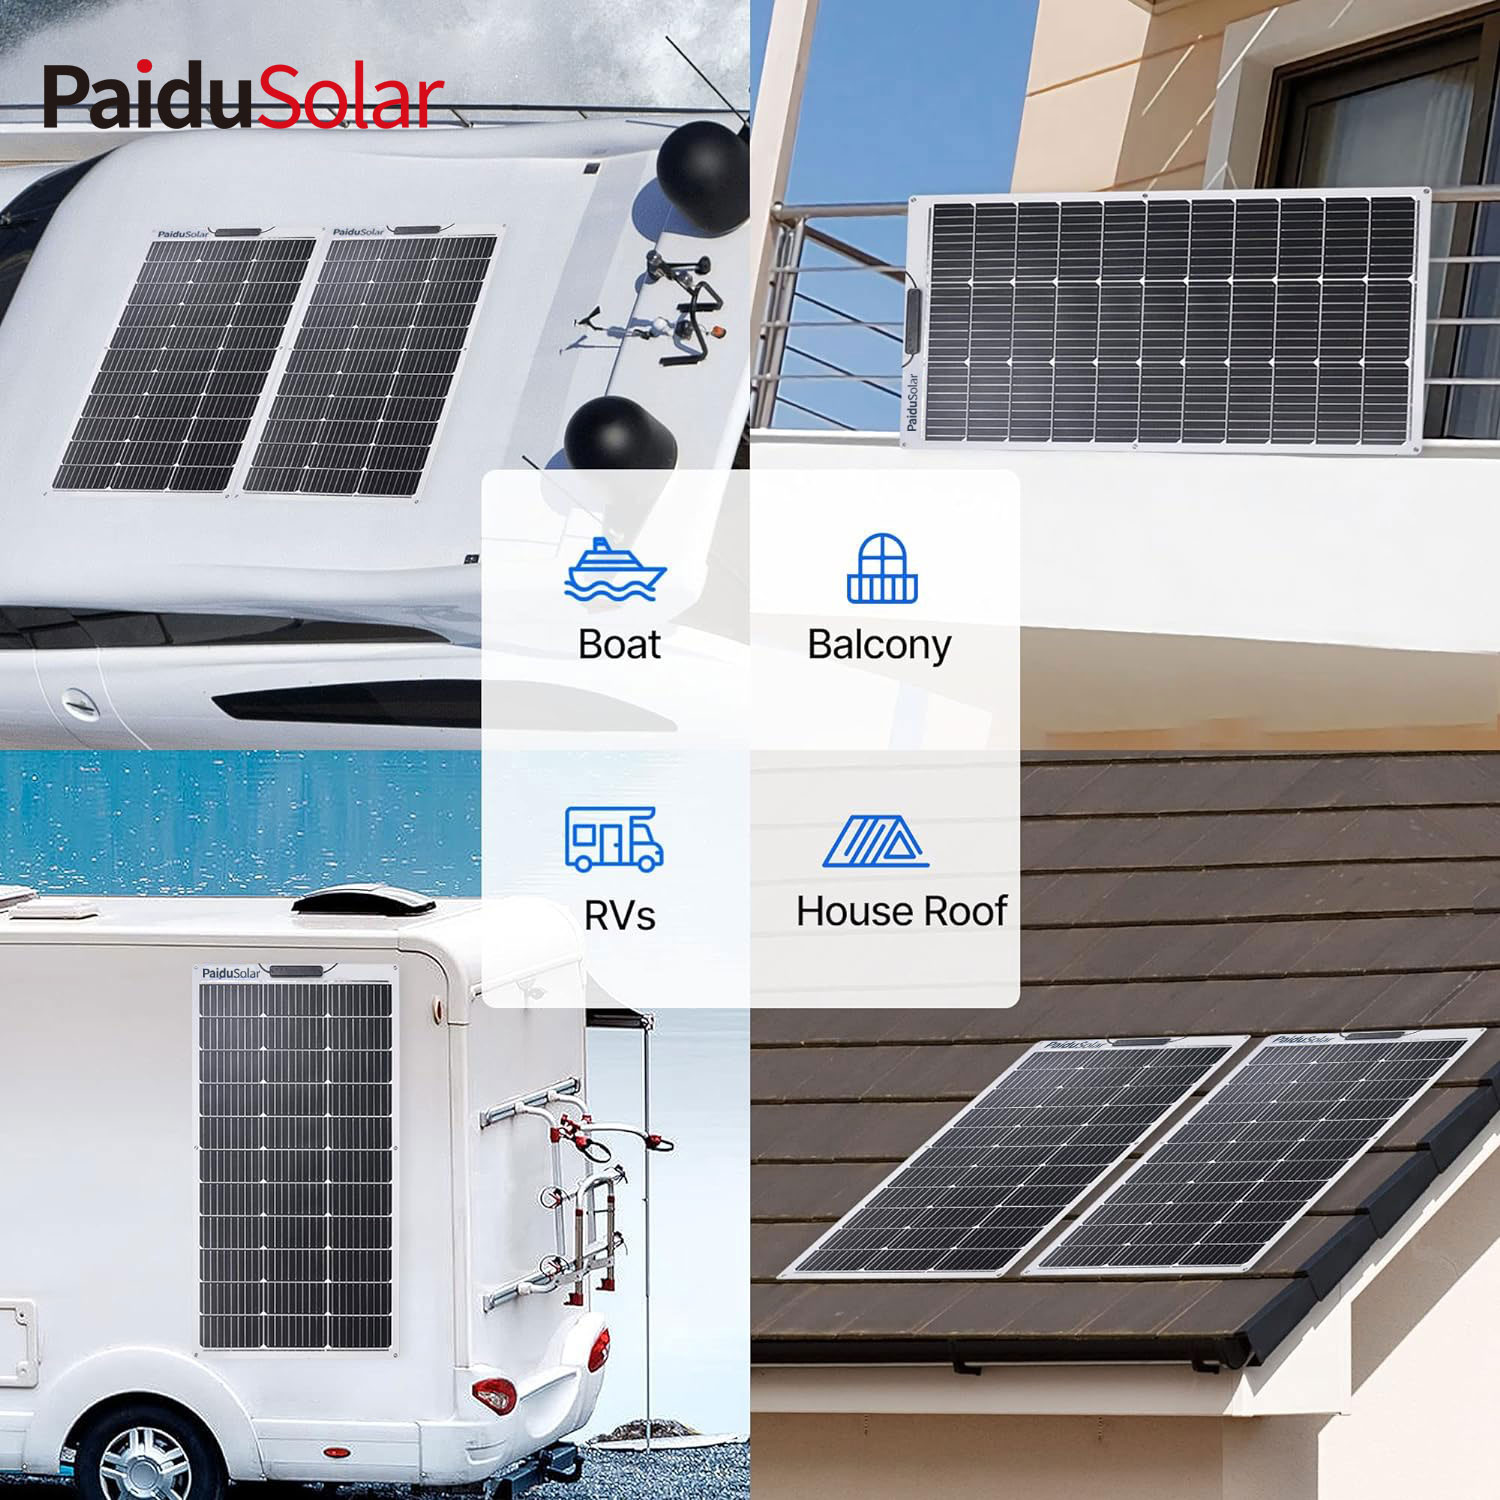 PaiduSolar-100W-12V-Volt-Semi-flexible-Panel-Solar-Ho-Marina-RV-Trailer-Boat-Cabin-Van-Car_7hf4